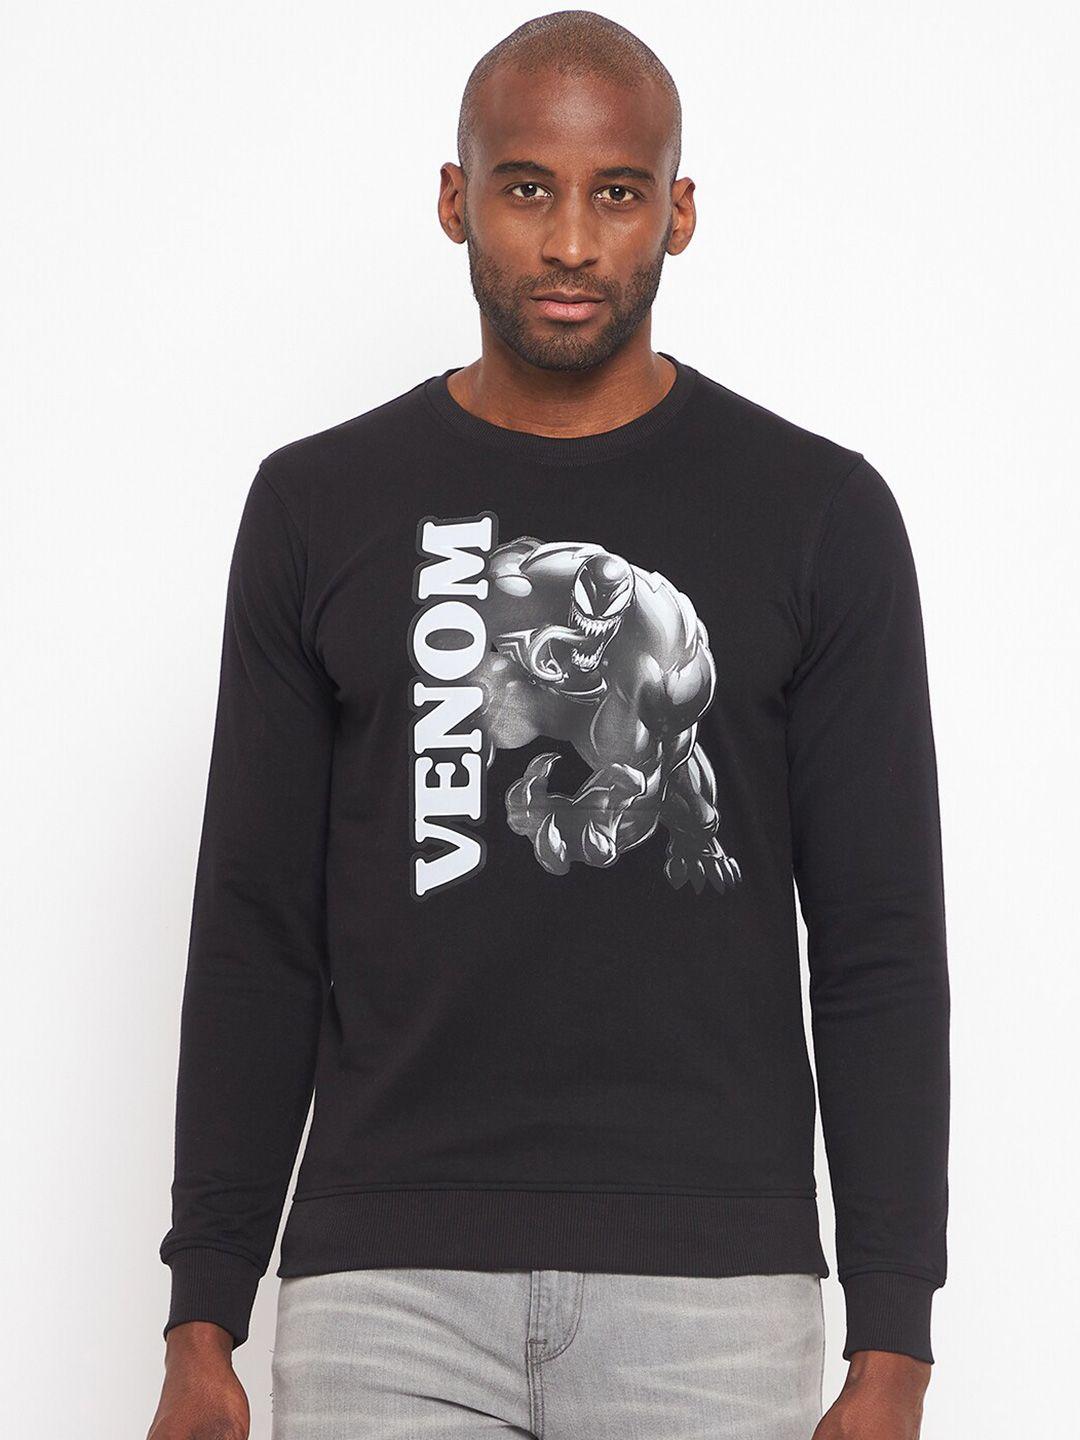 marvel-by-wear-your-mind-men-printed-sweatshirt